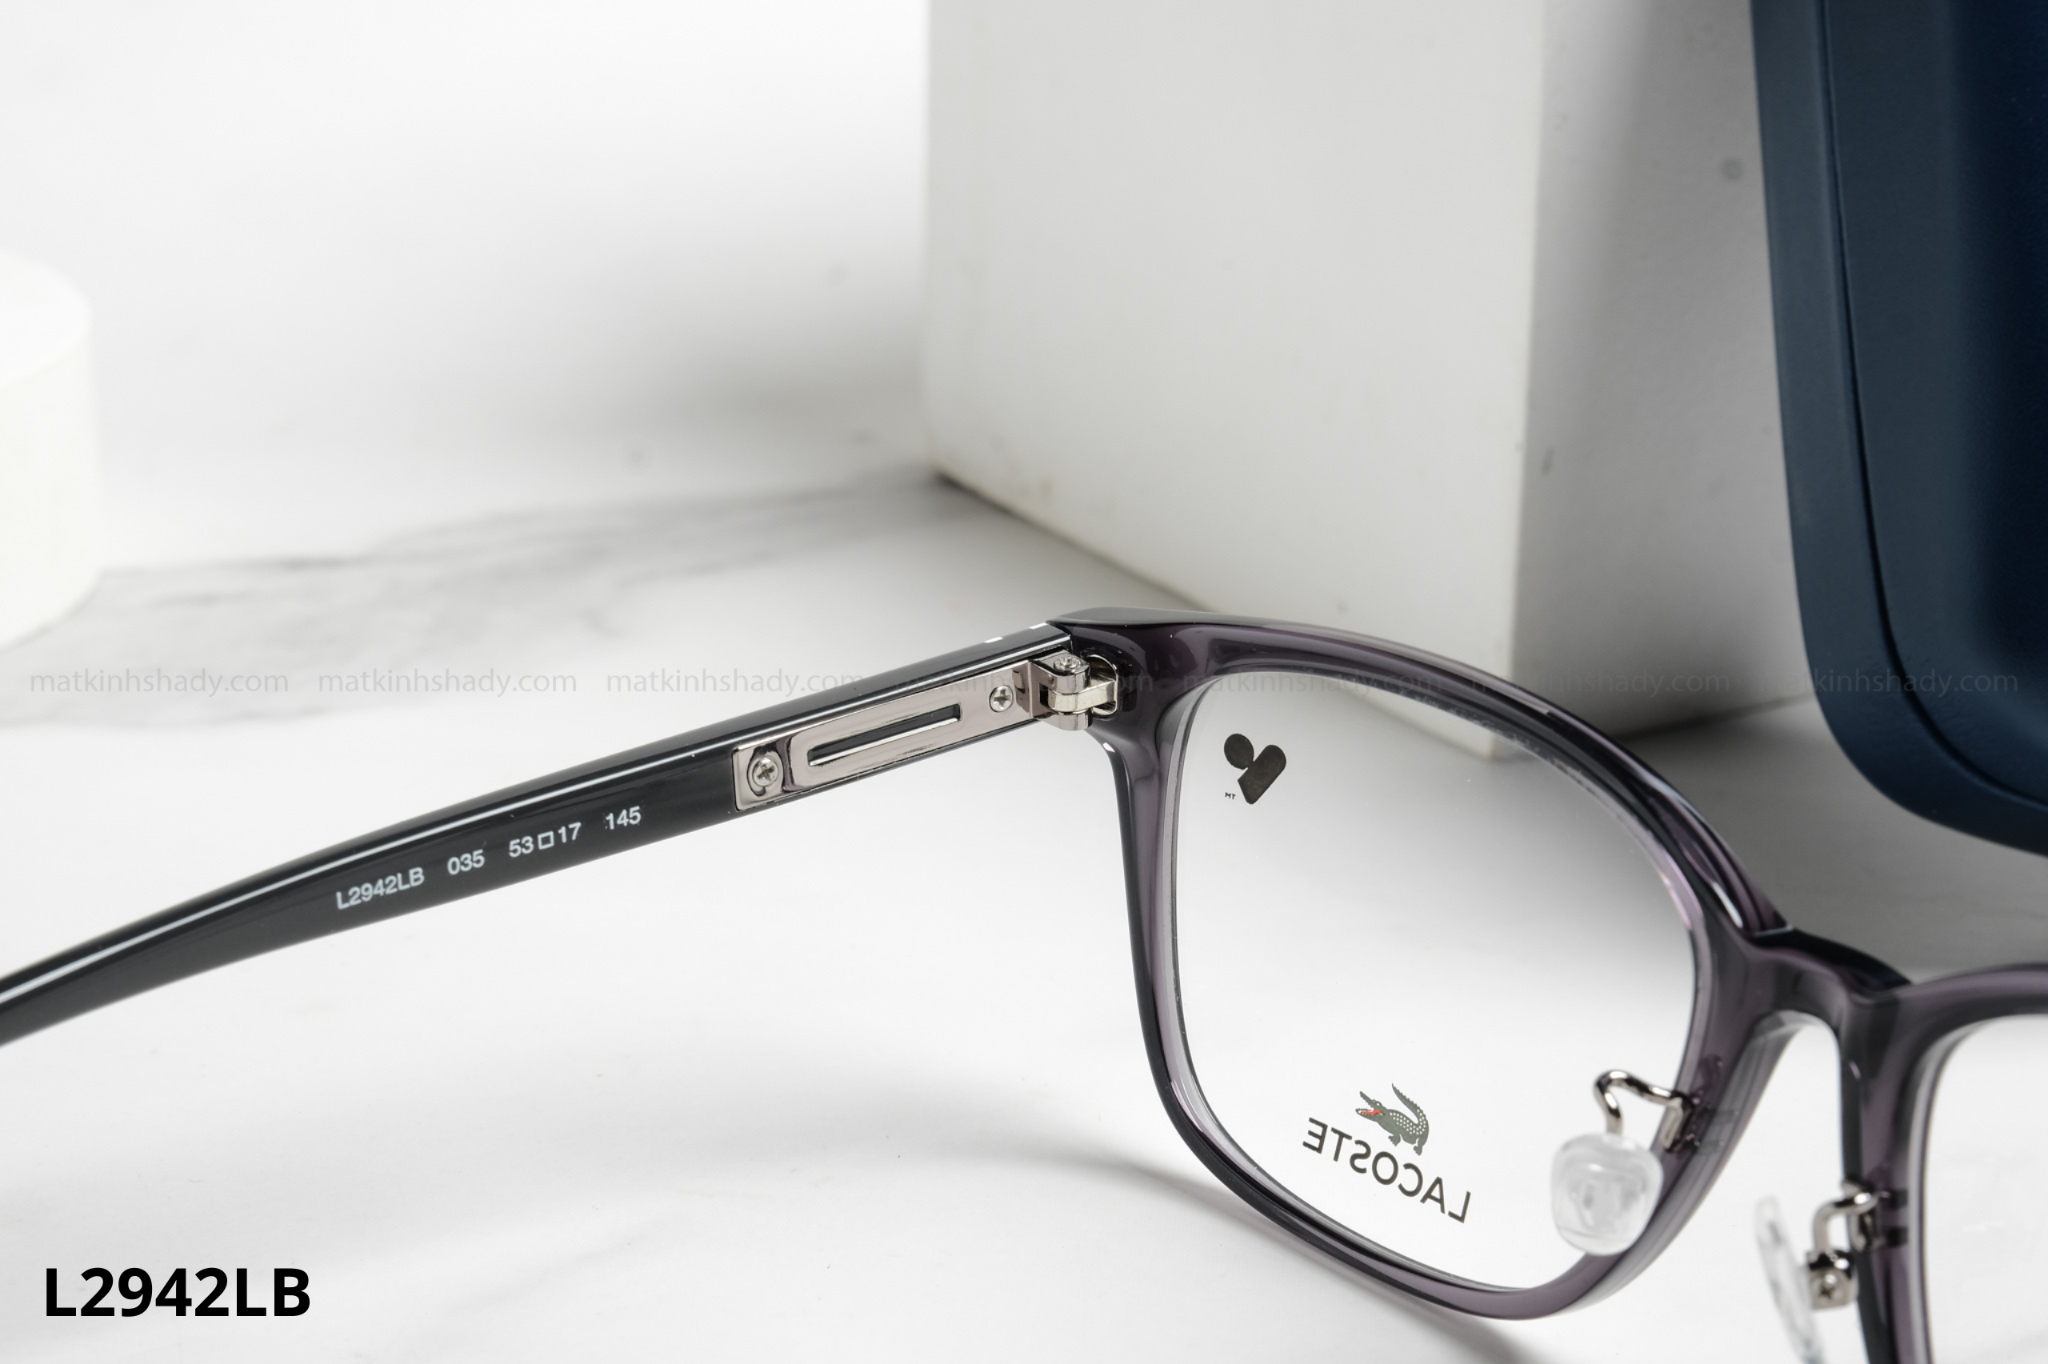  Lacoste Eyewear - Glasses - L2942LB 